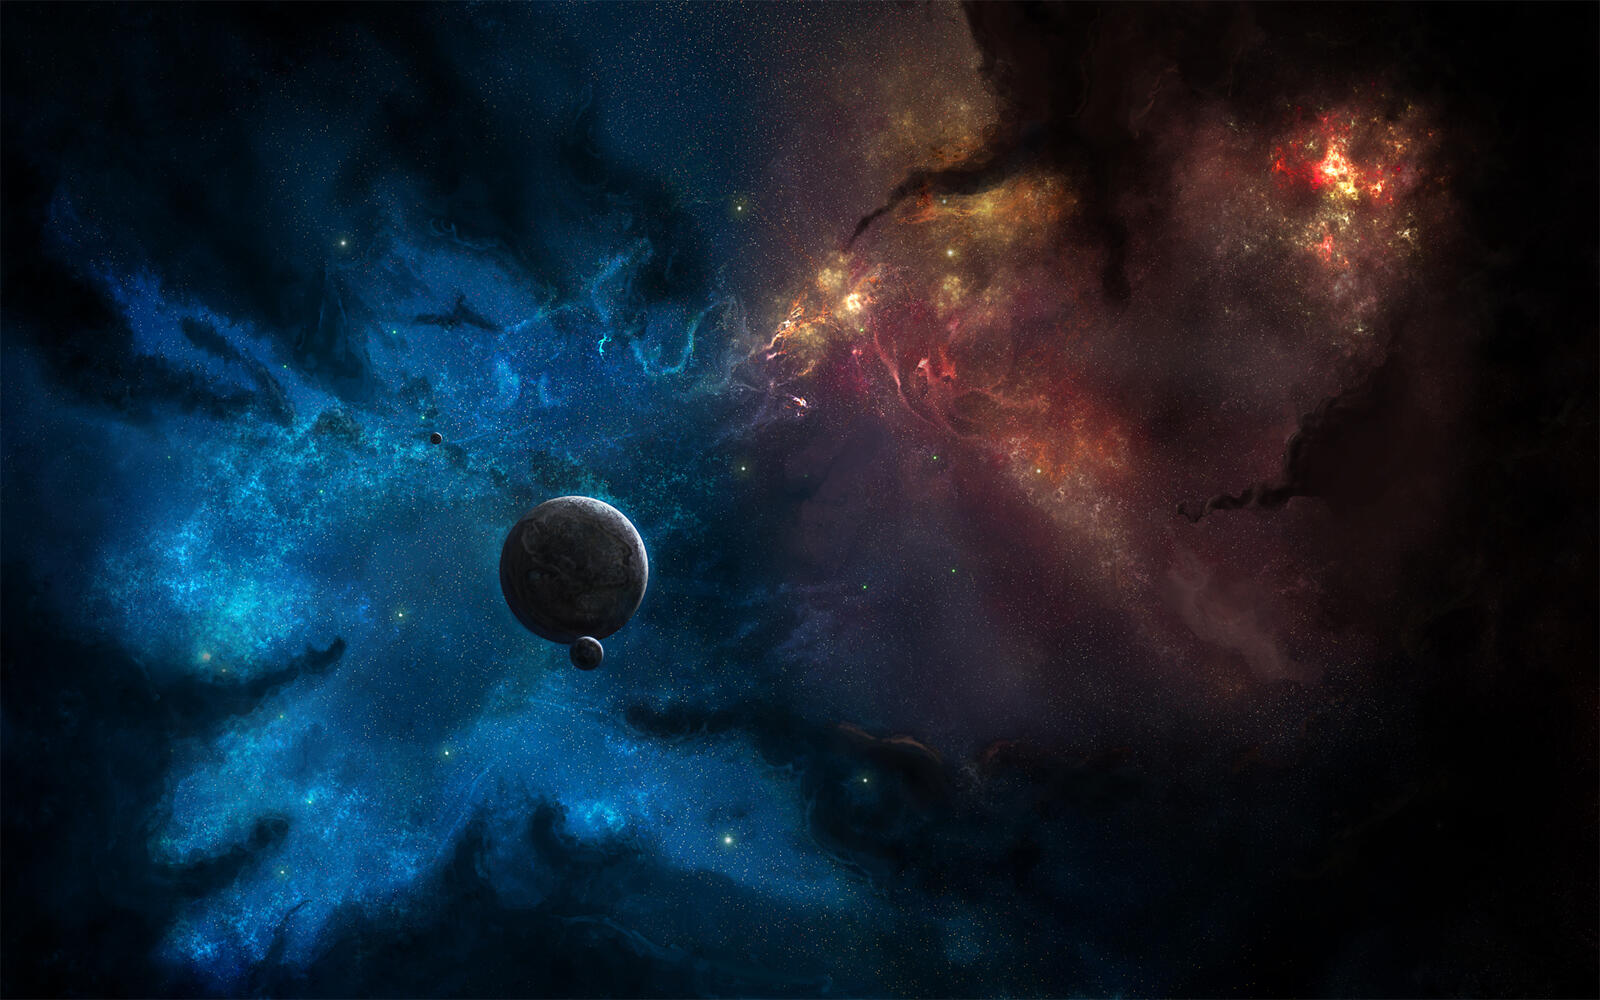 Wallpapers Nebula stars planets on the desktop